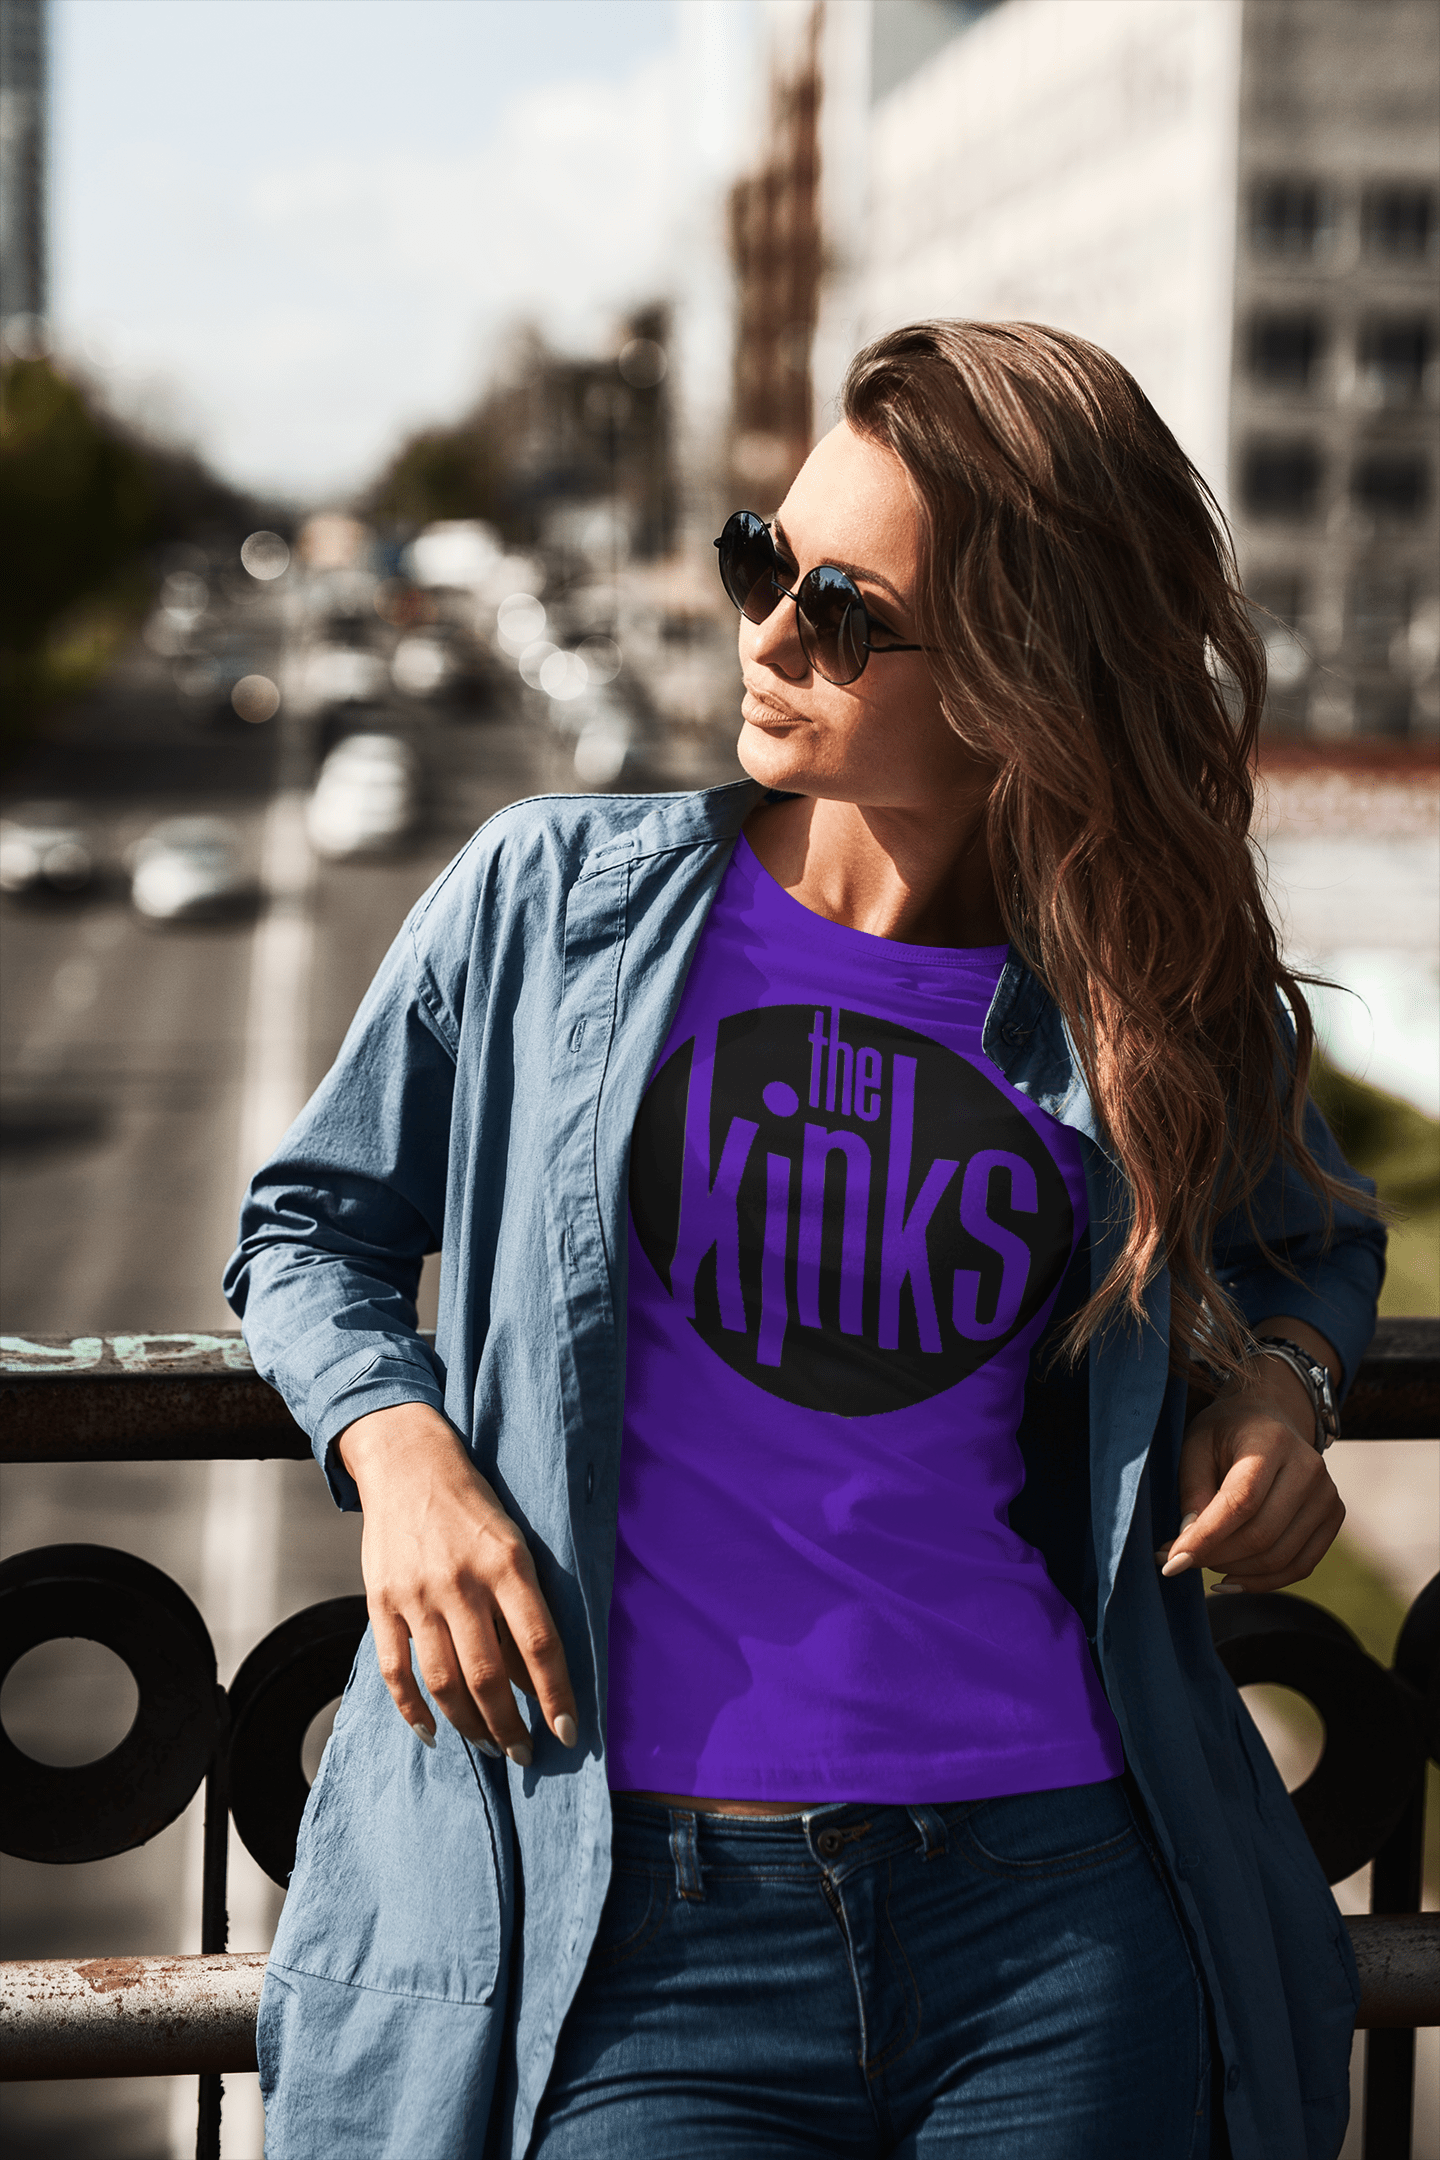 The Kinks T Shirt Classic Rock T-Shirts rockviewtees.com